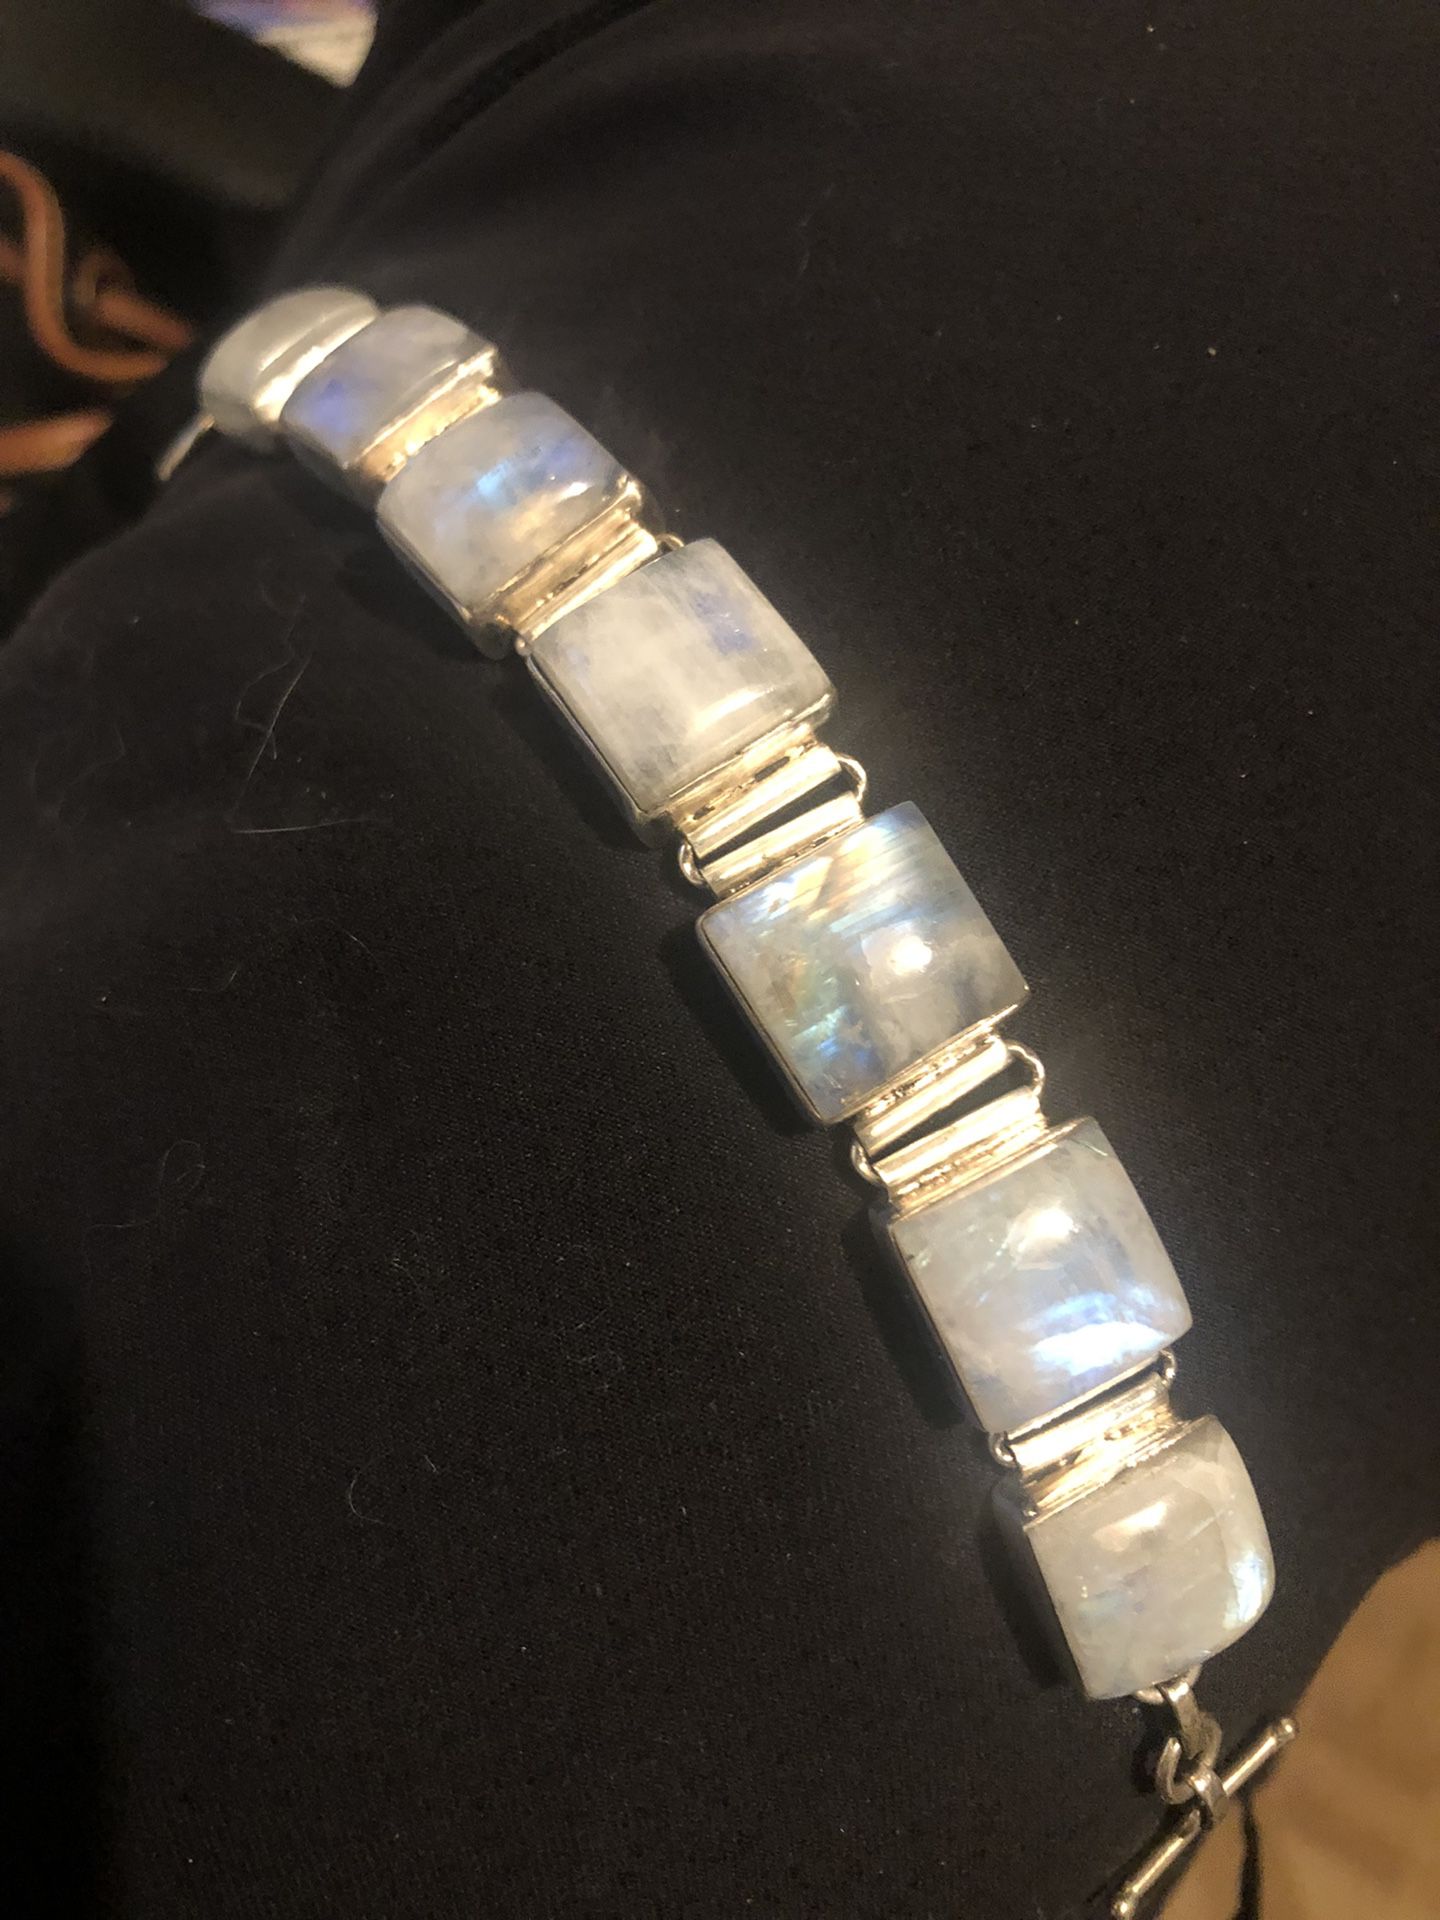 Sterling Silver Moonstone Bracelet 